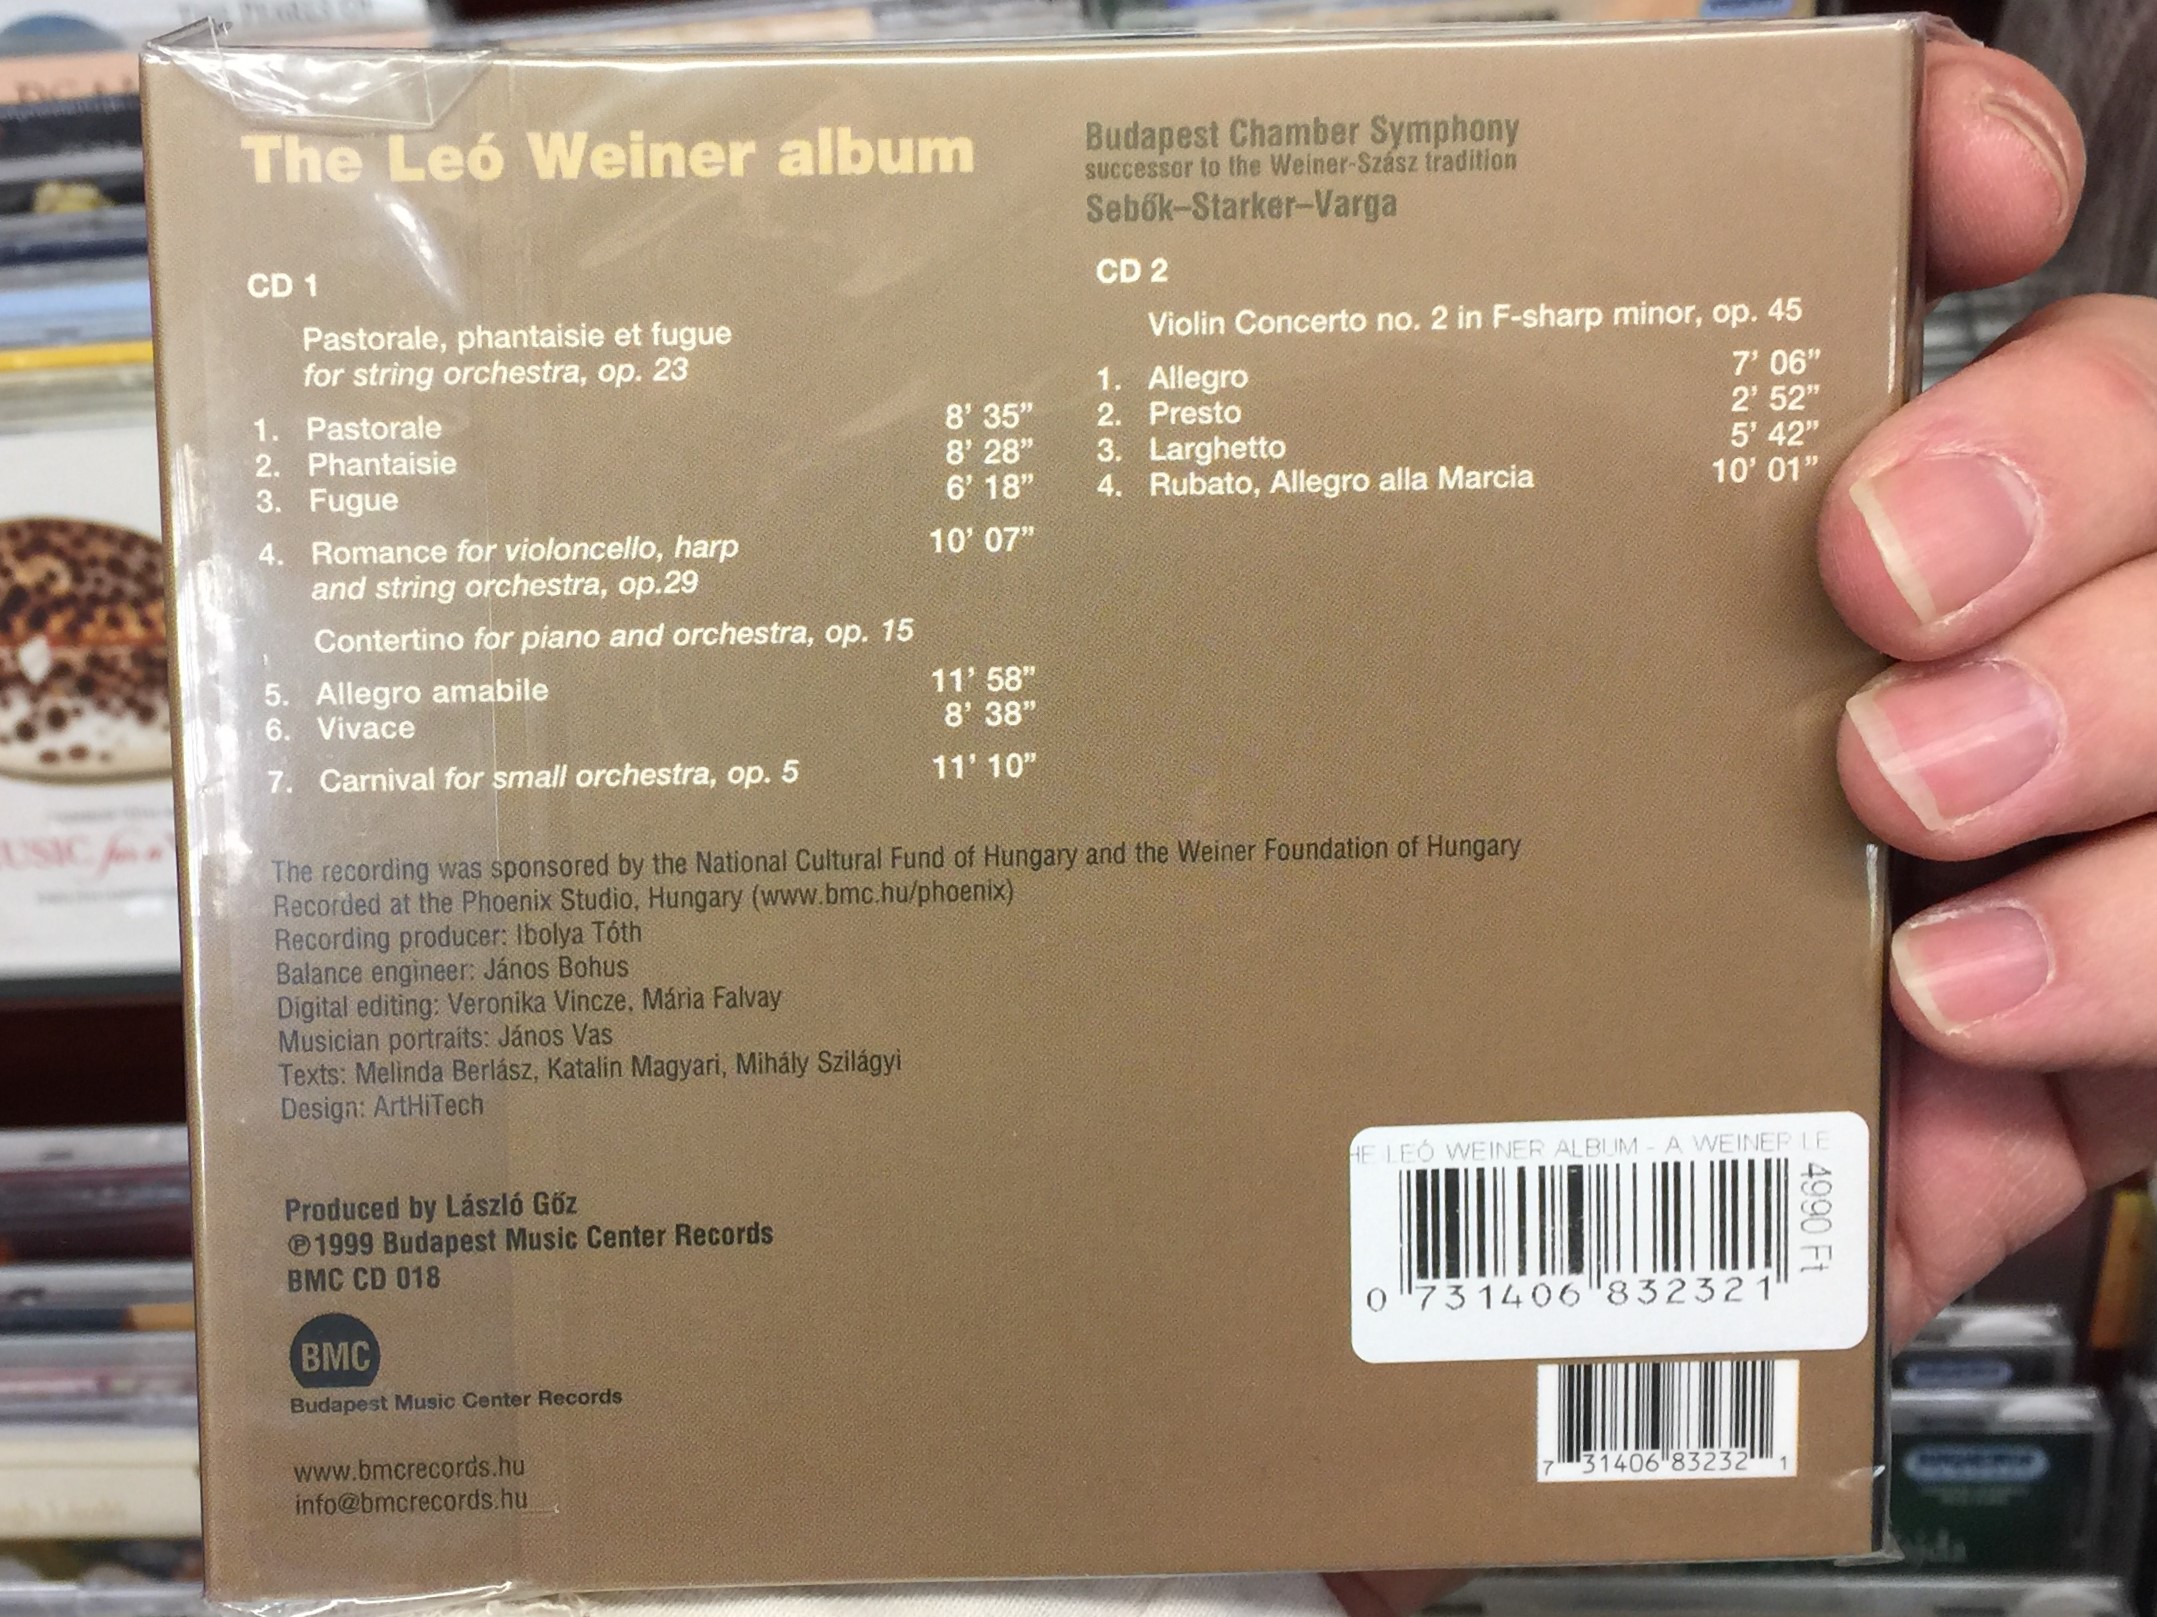 the-leo-weiner-album-budapest-chamber-symphony-successor-to-the-weiner-szasz-tradition-sabok-starker-varga-budapest-music-center-records-2x-audio-cd-1998-bmc-cd-018-2-.jpg